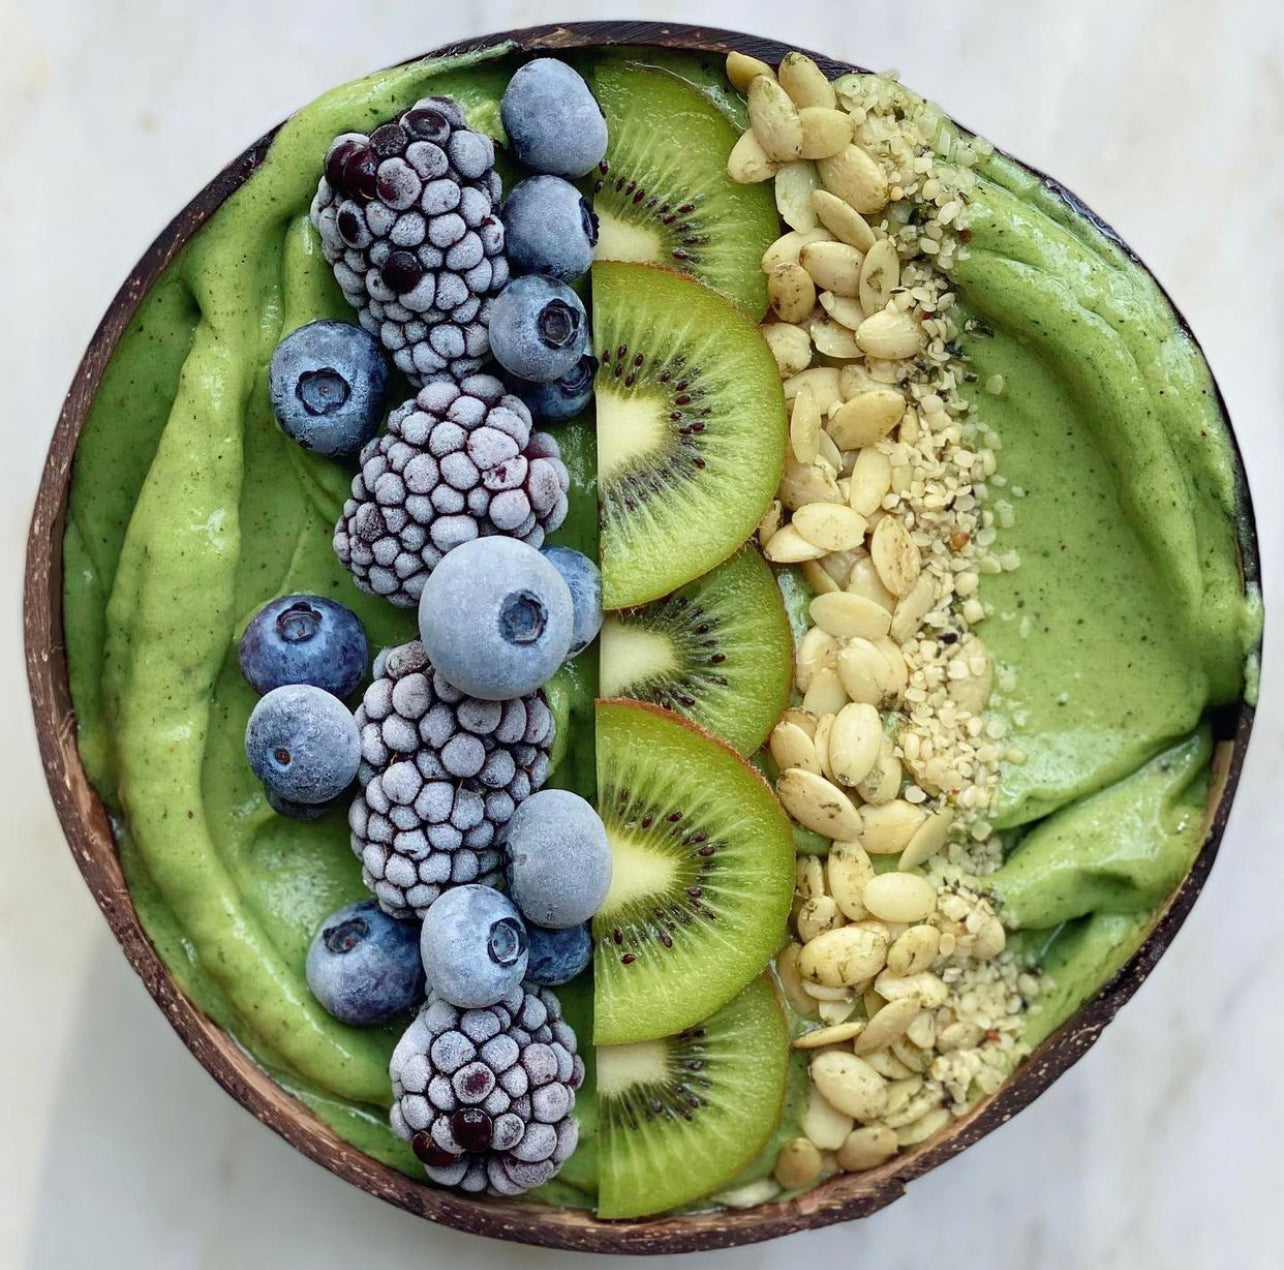 SuperGreen & Kiwi – You Love Fruit